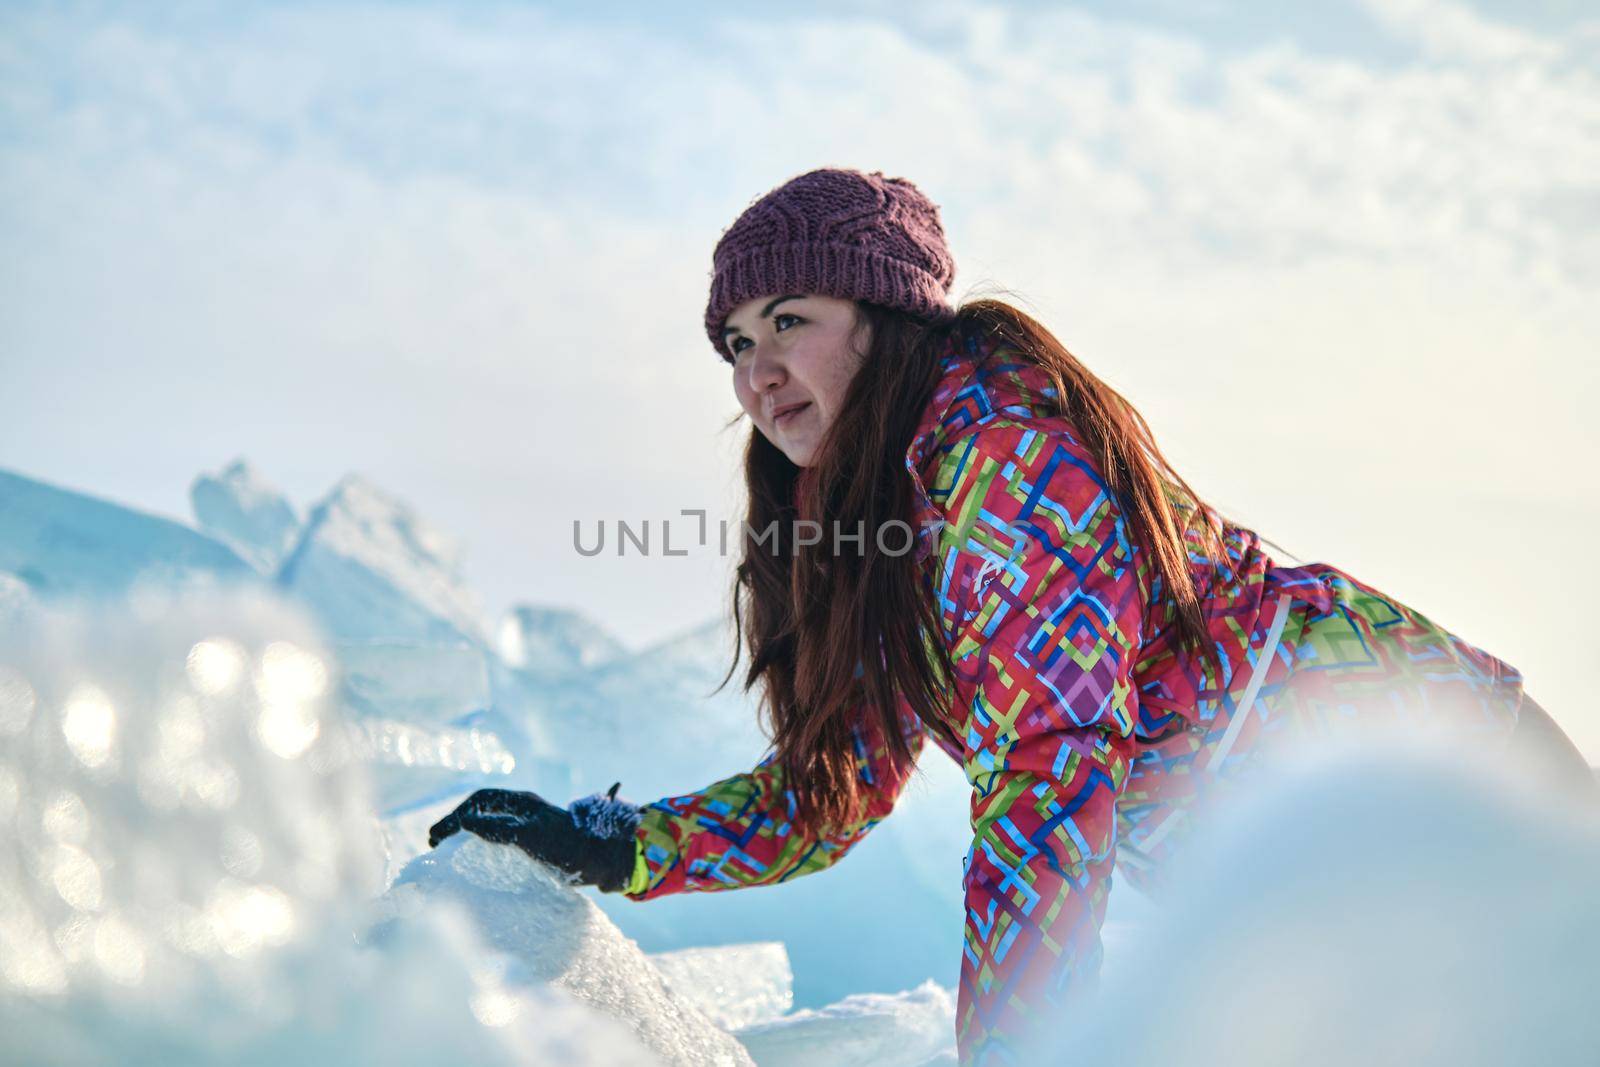 A woman in a ski suit climbs on blocks of ice, fun, fun, rest, winter